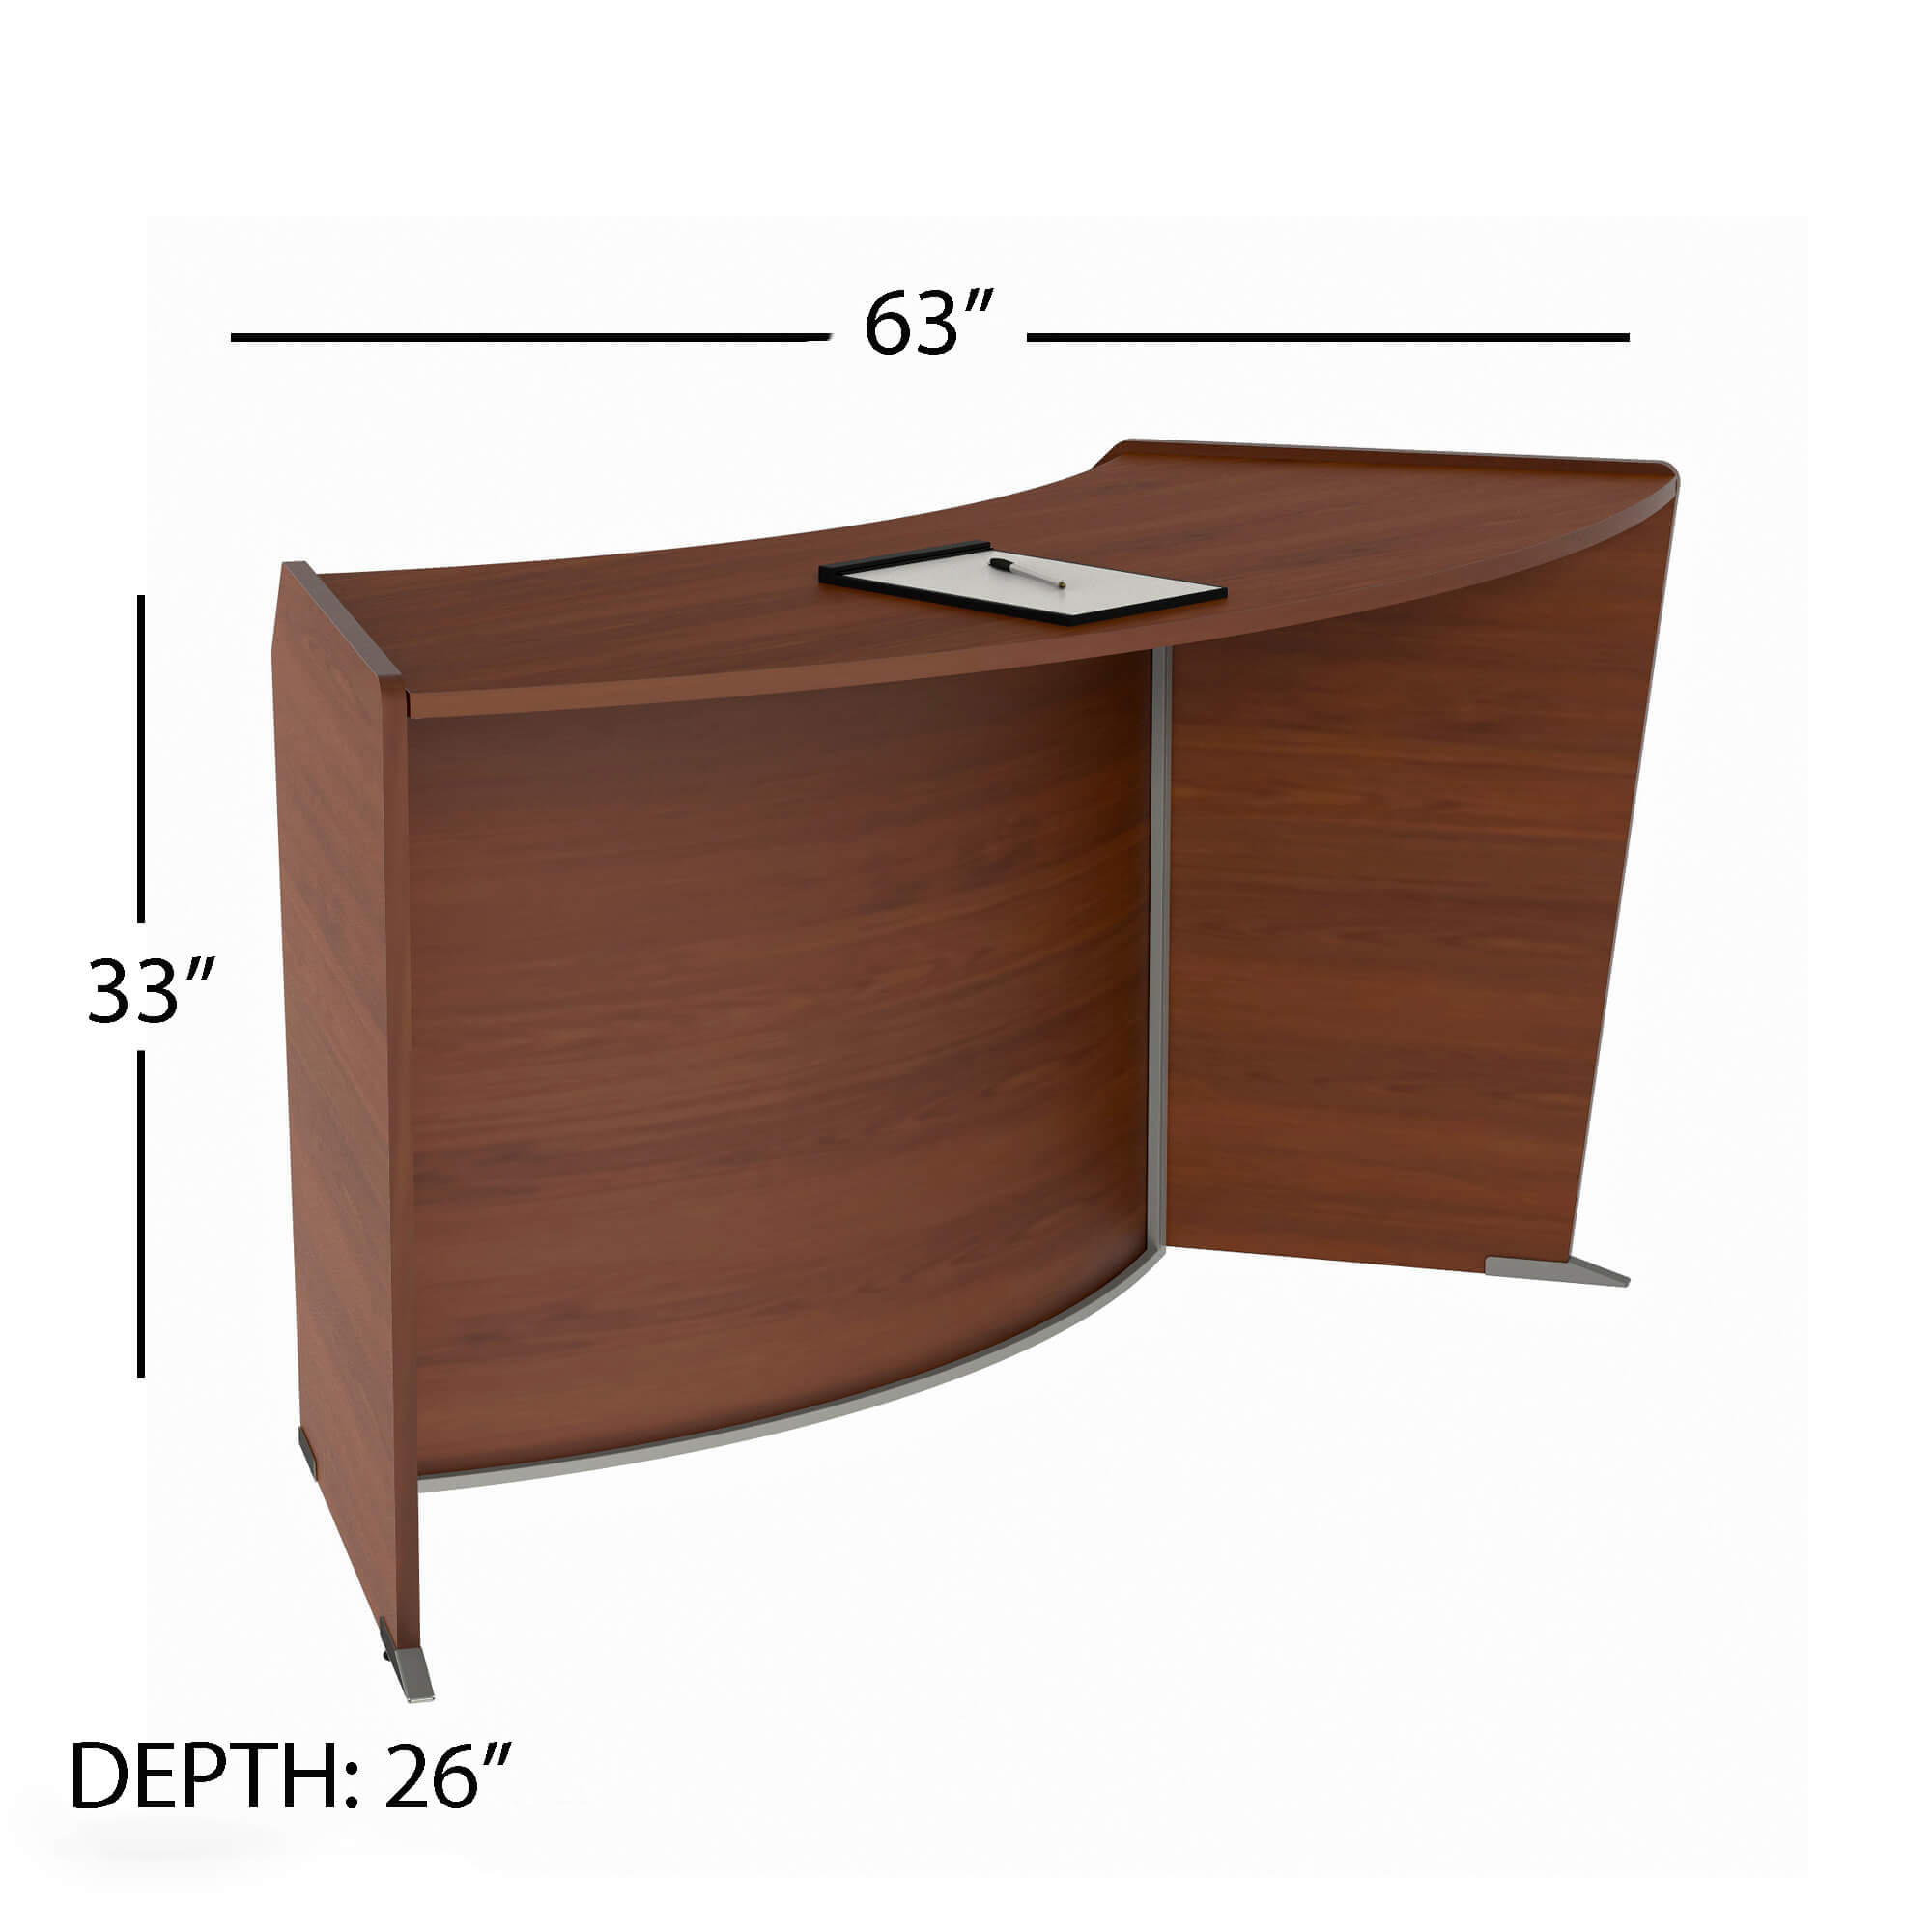 Li1 ada reception desk dimensions 1